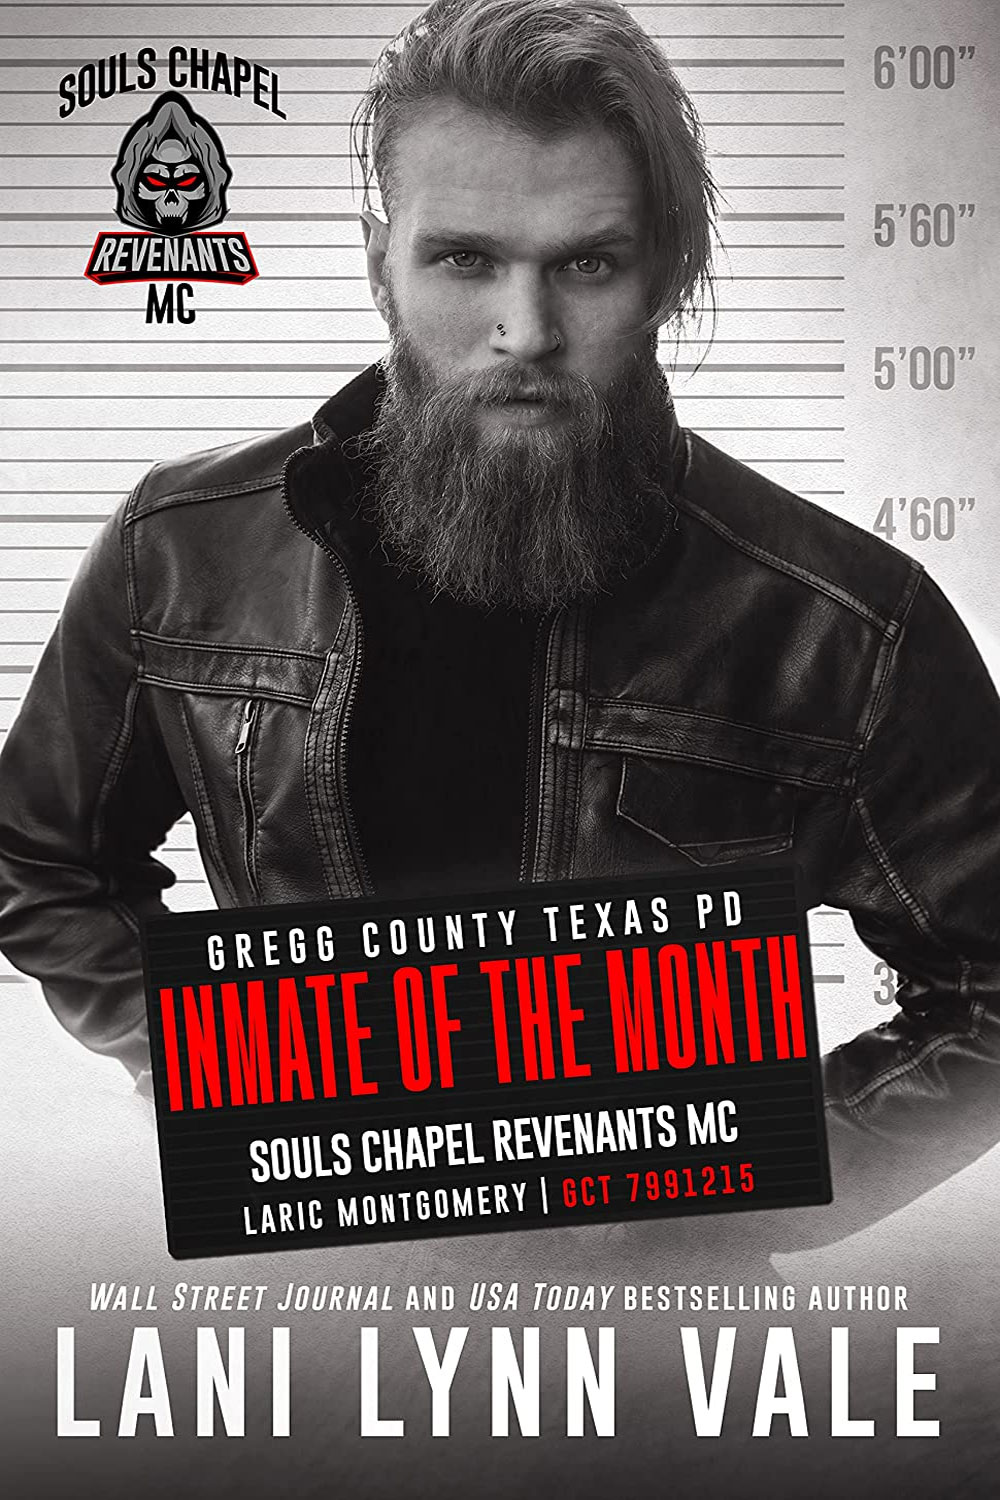 Inmate of the Month (Souls Chapel Revenants MC #7)